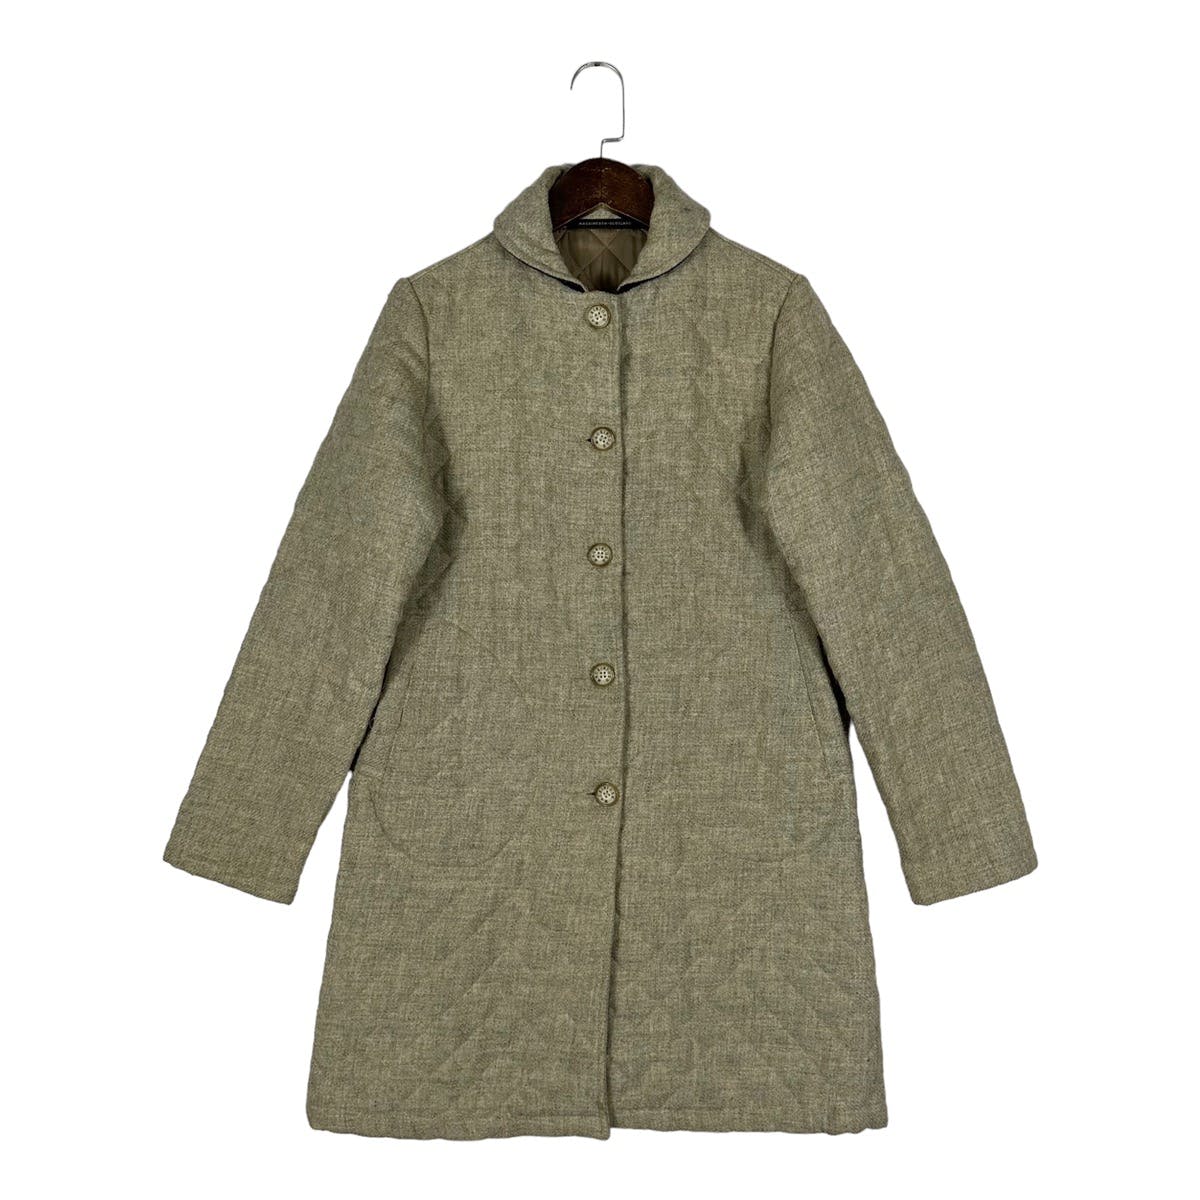 Mackintosh Quilted Beige Coat Jacket - 2